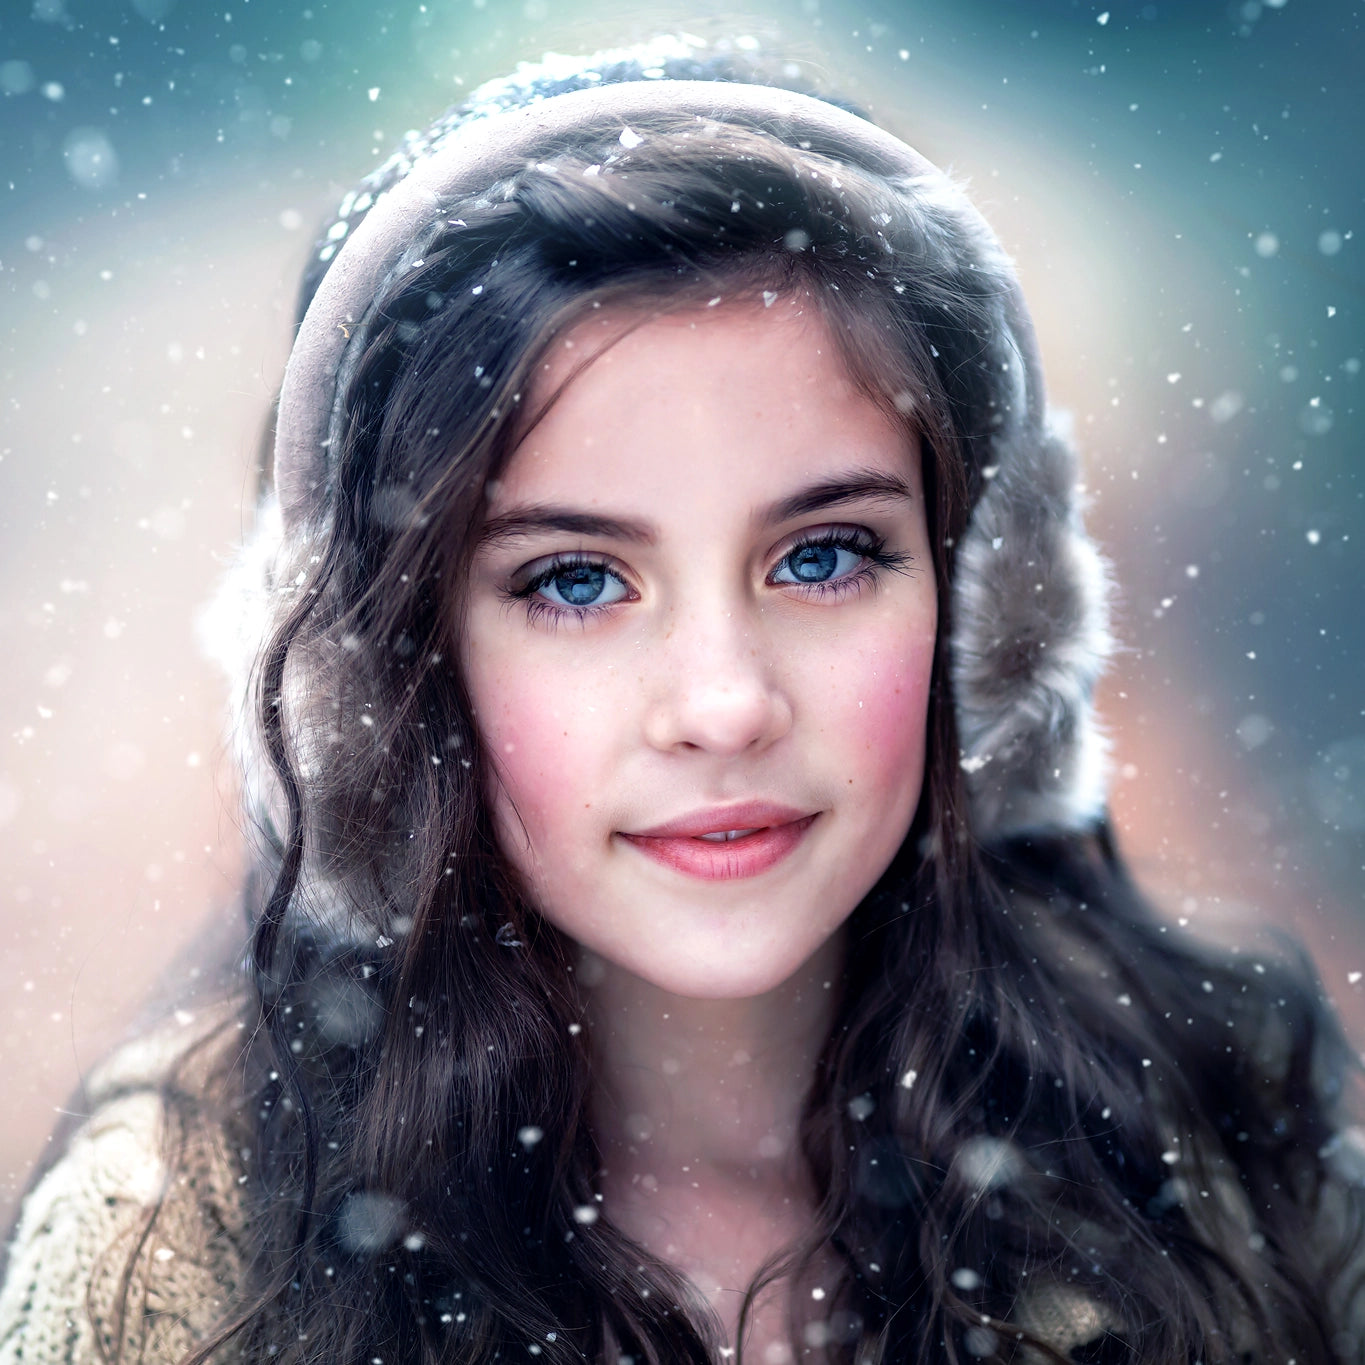 Winter Wonderland Snow Overlays for Photo Editing